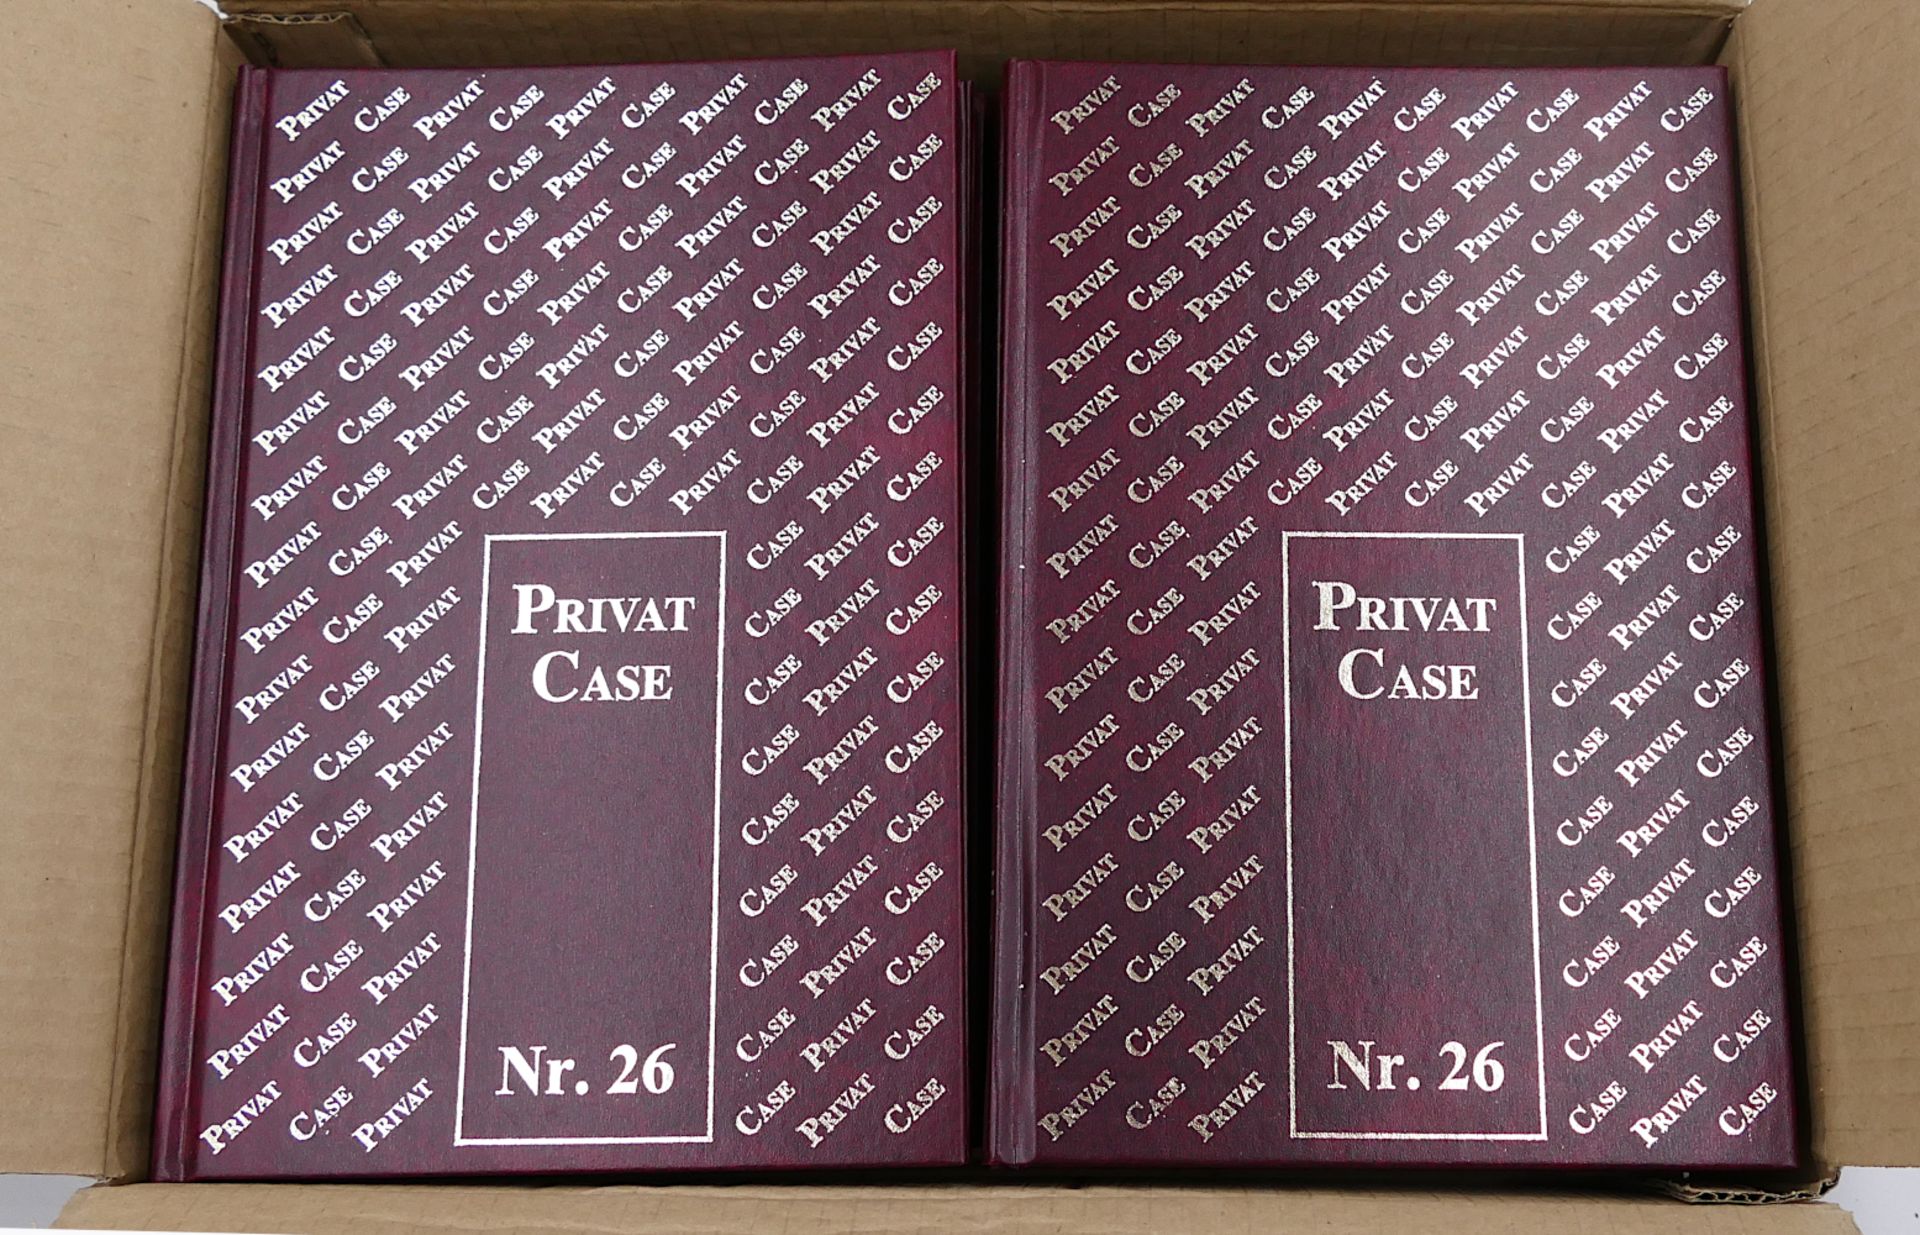 1 Konv. Bücher zum Thema Erotik (ca. 74 Stück) z.B. 20x "Privat Case Nr. 26 - Klostersex", 10x "Erot - Image 3 of 3